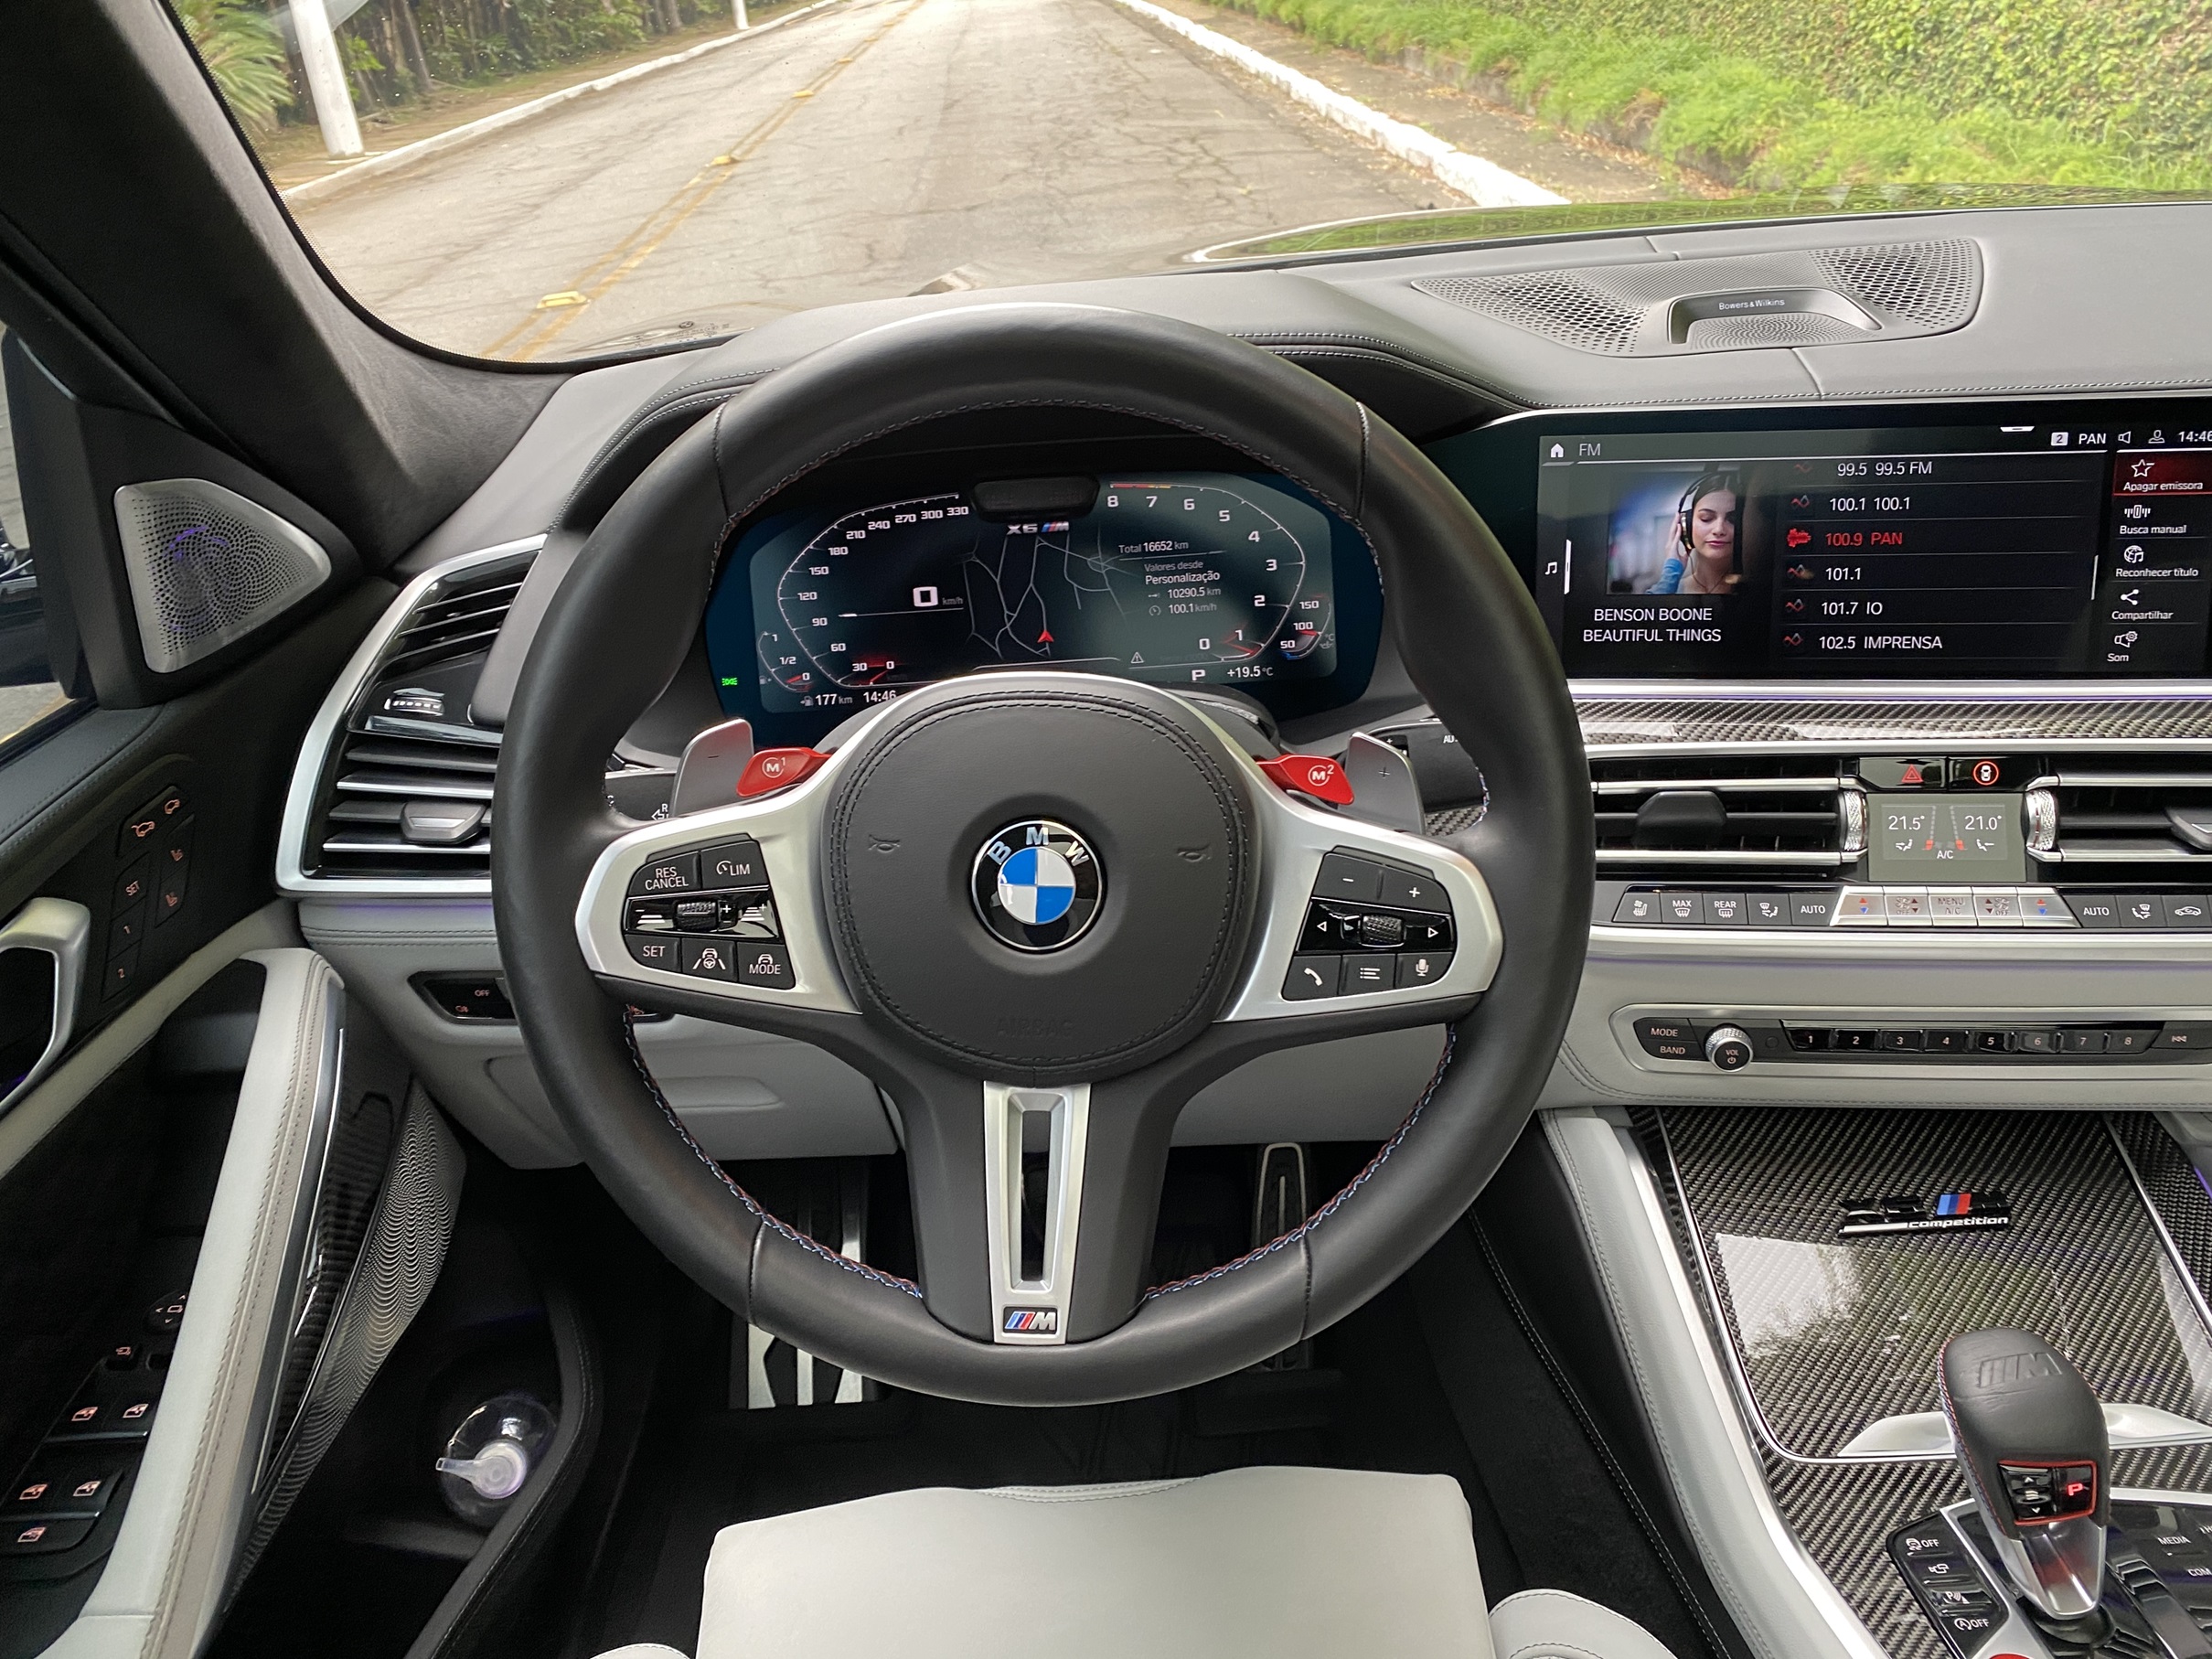 BMW X6 4.4 V8 BITURBO GASOLINA M COMPETITION  AUTOMATICO